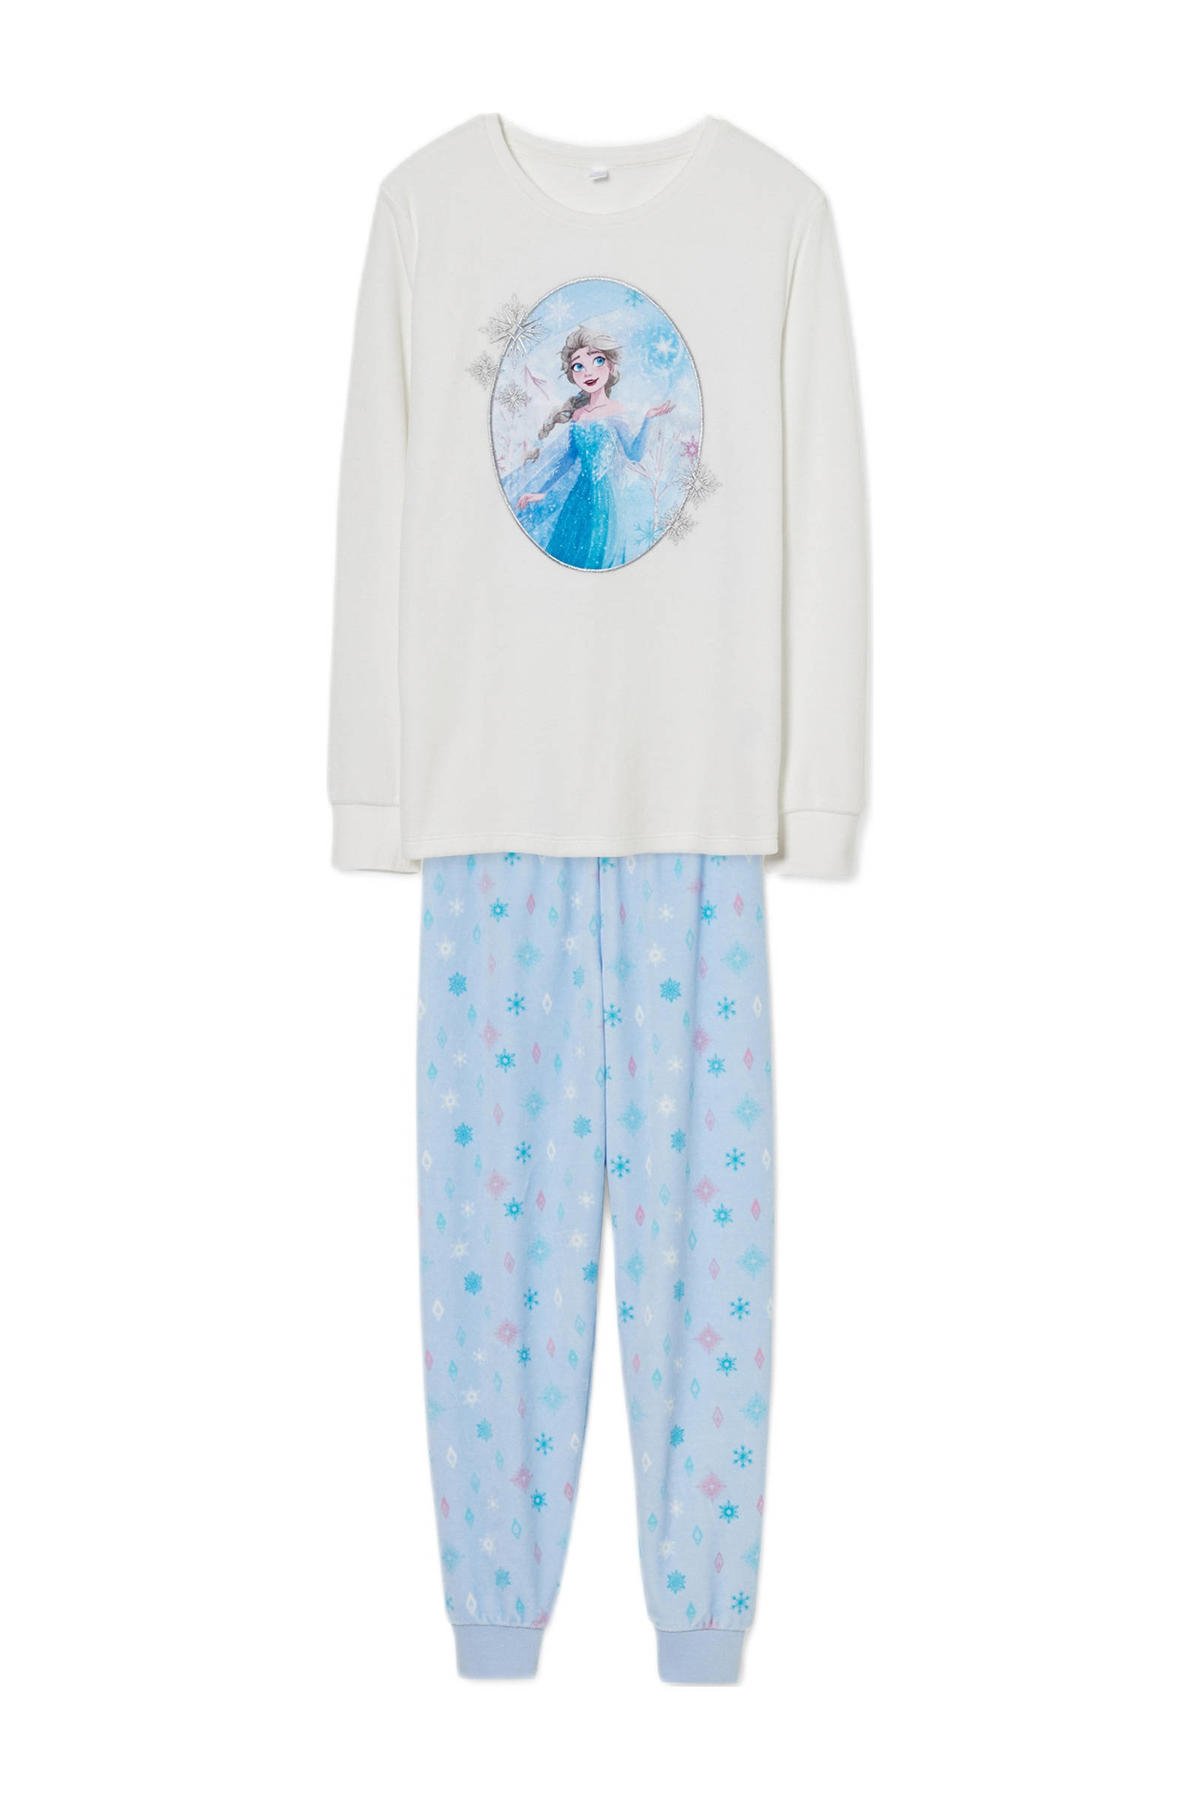 C&A Disney Frozen pyjama printopdruk wit |